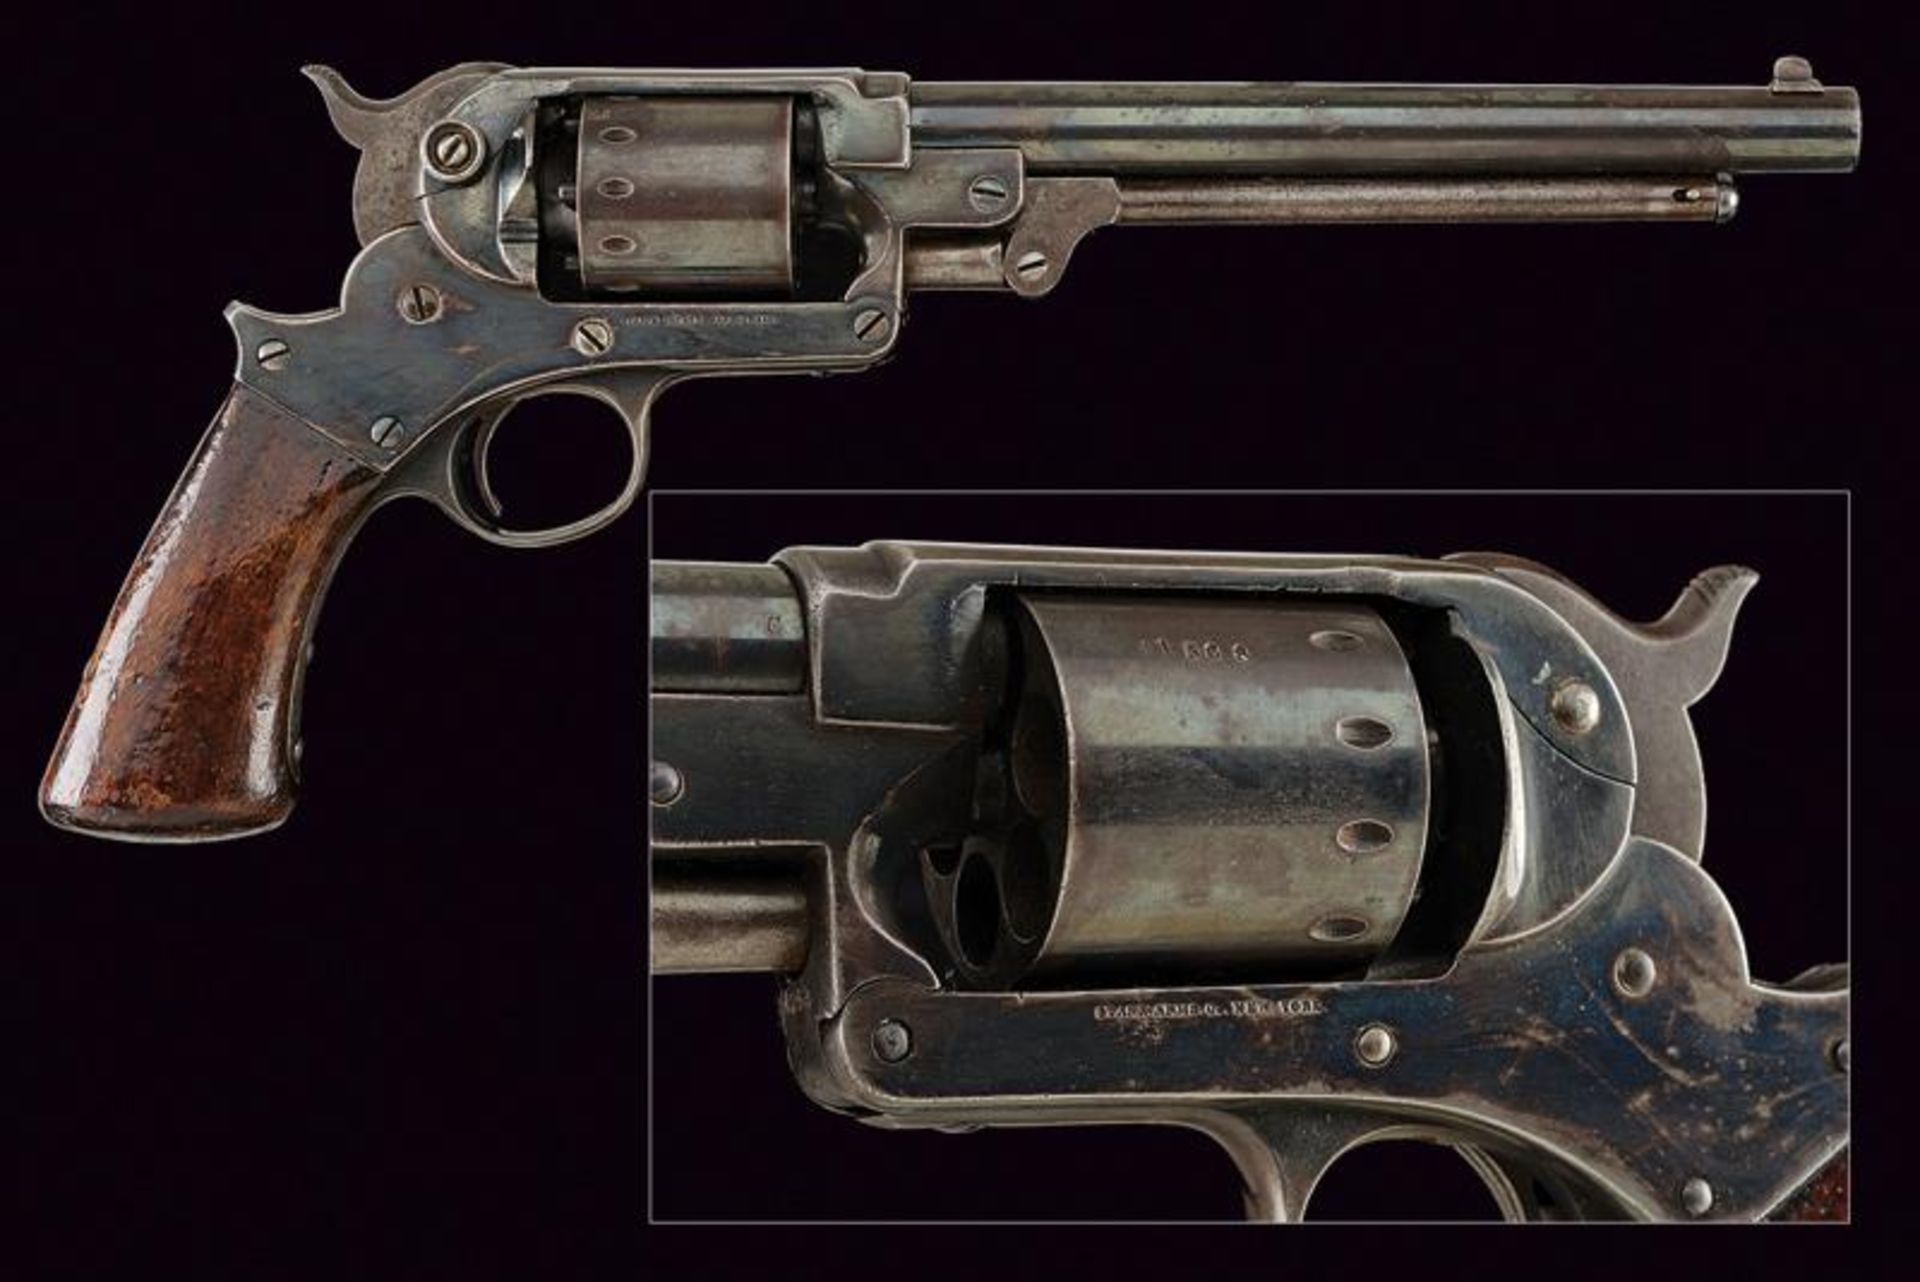 A Starr Arms Co. S.A. 1863 Army Revolver